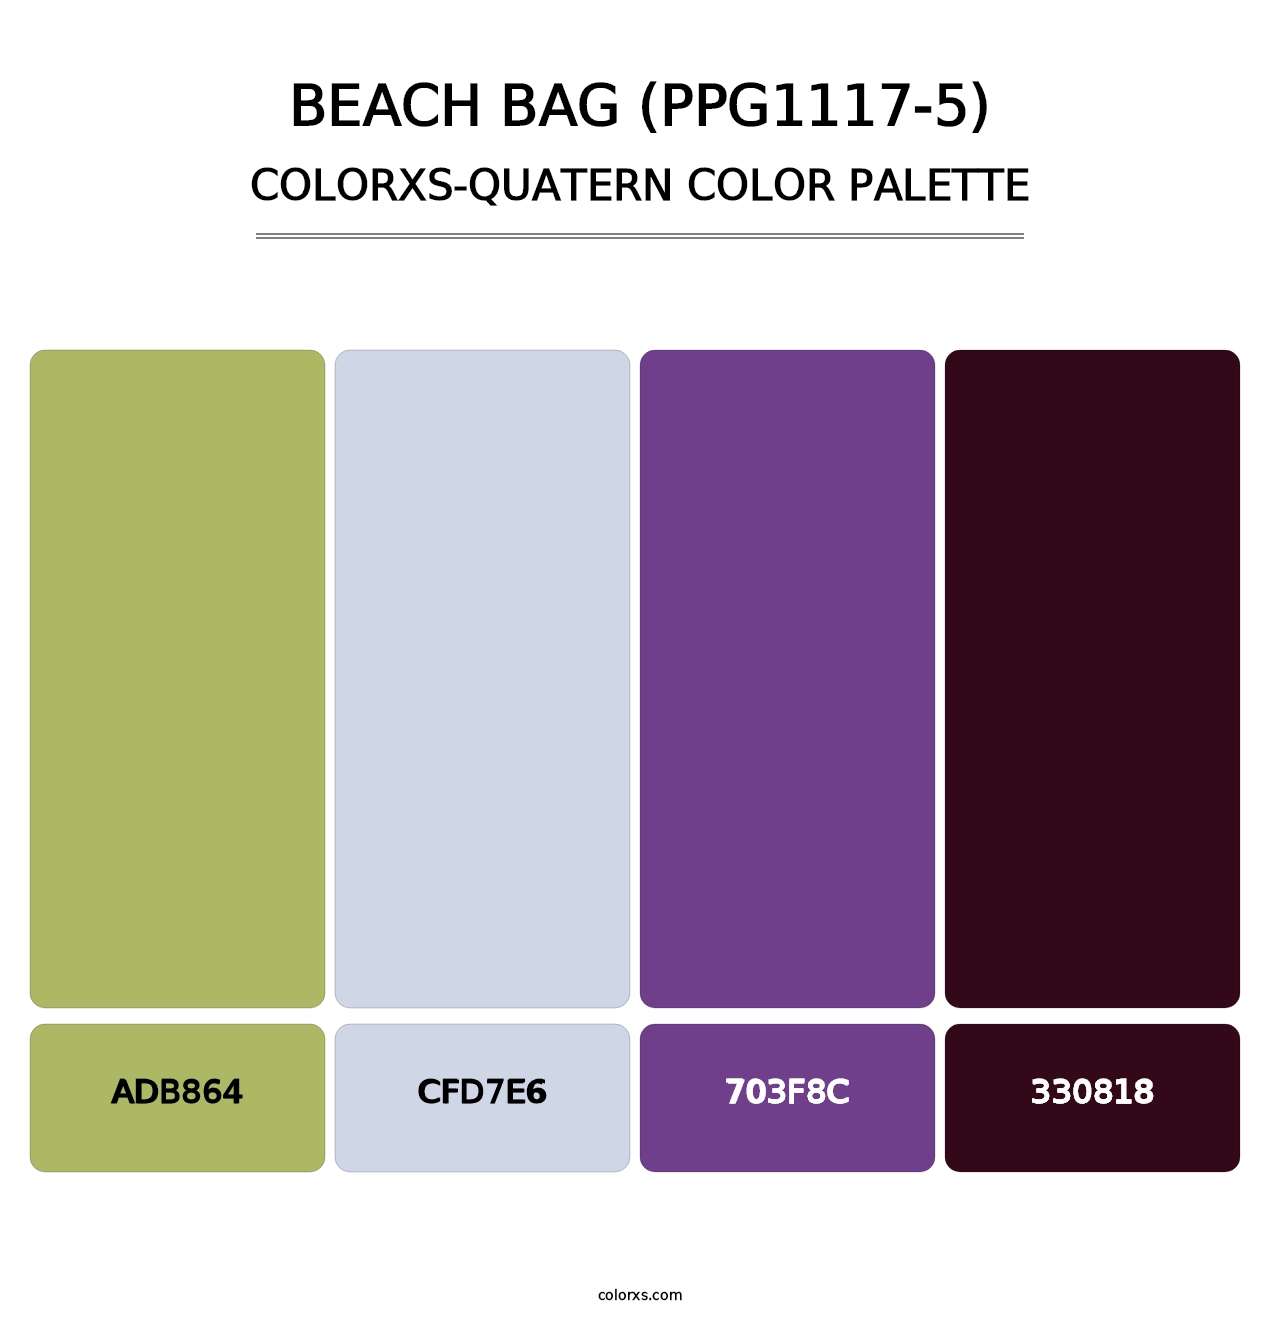 Beach Bag (PPG1117-5) - Colorxs Quatern Palette